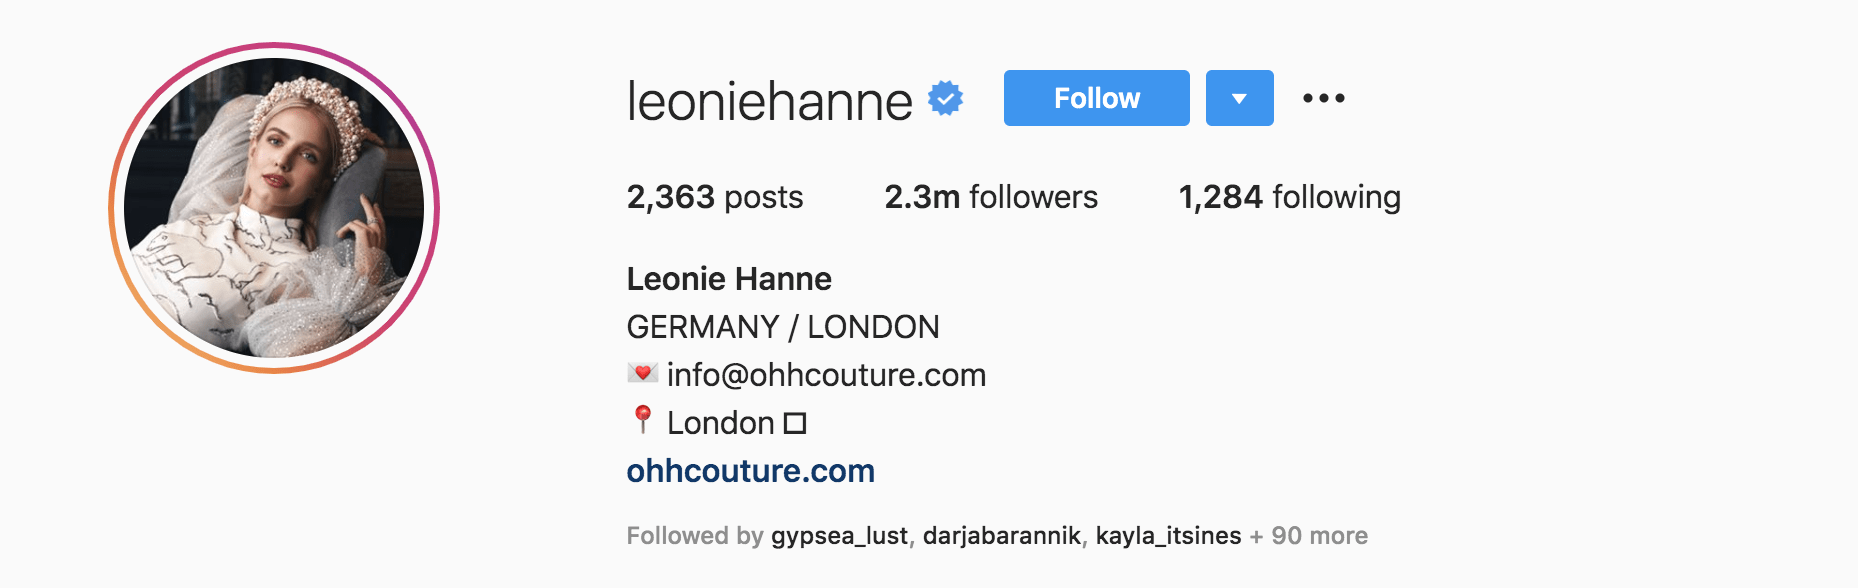 Top Fashion Influencers- Leonie Hanne